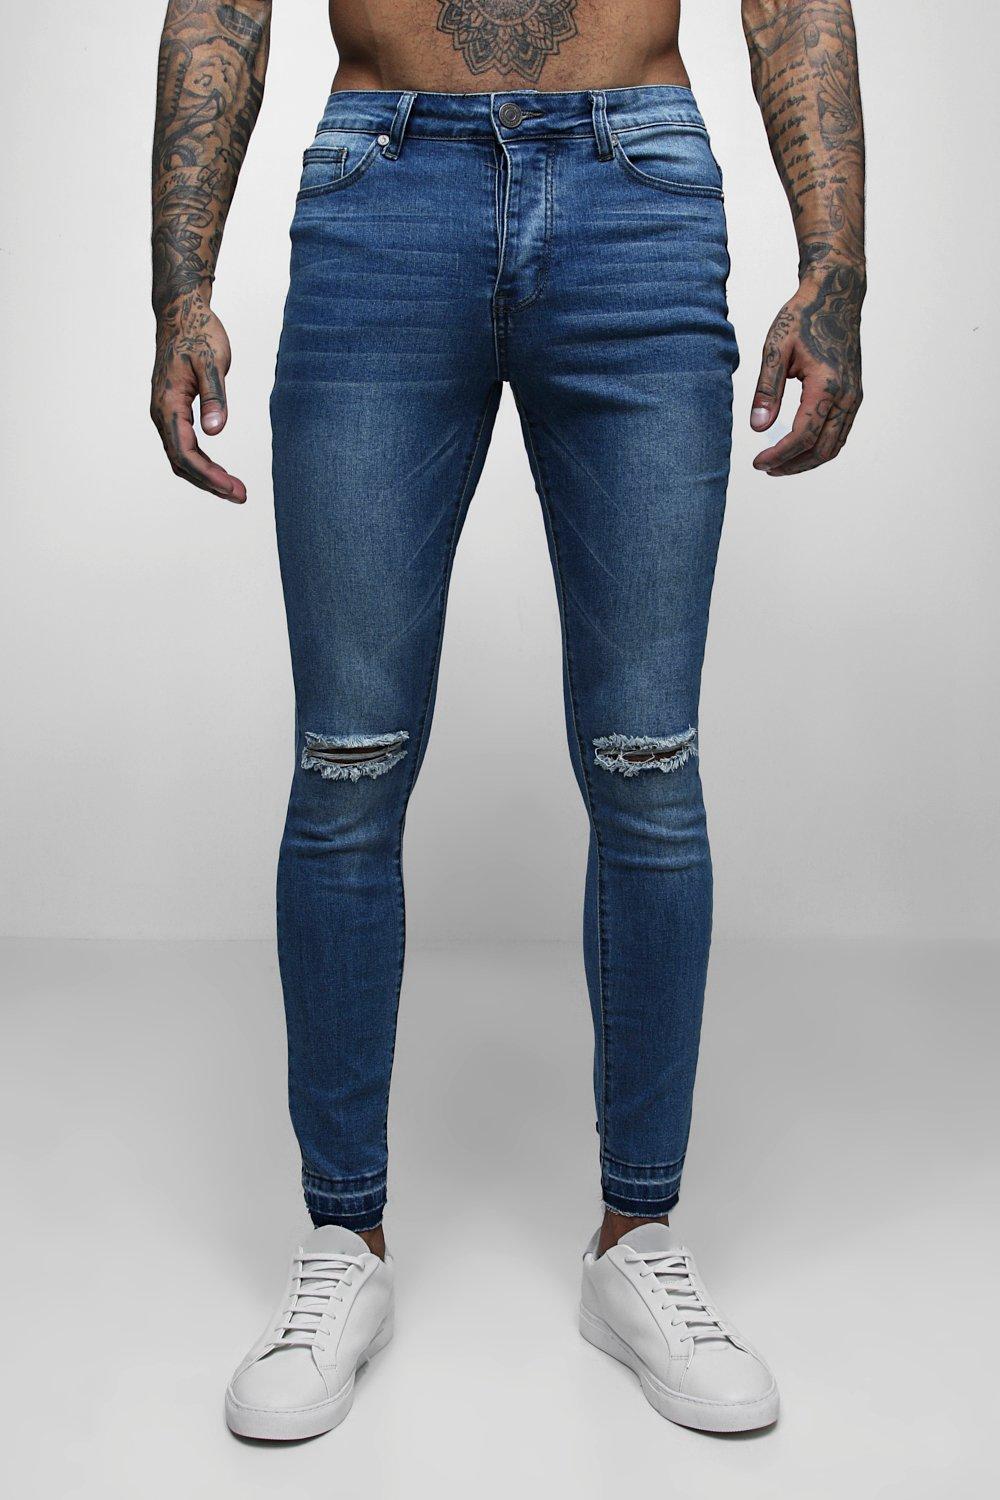 mens raw edge jeans